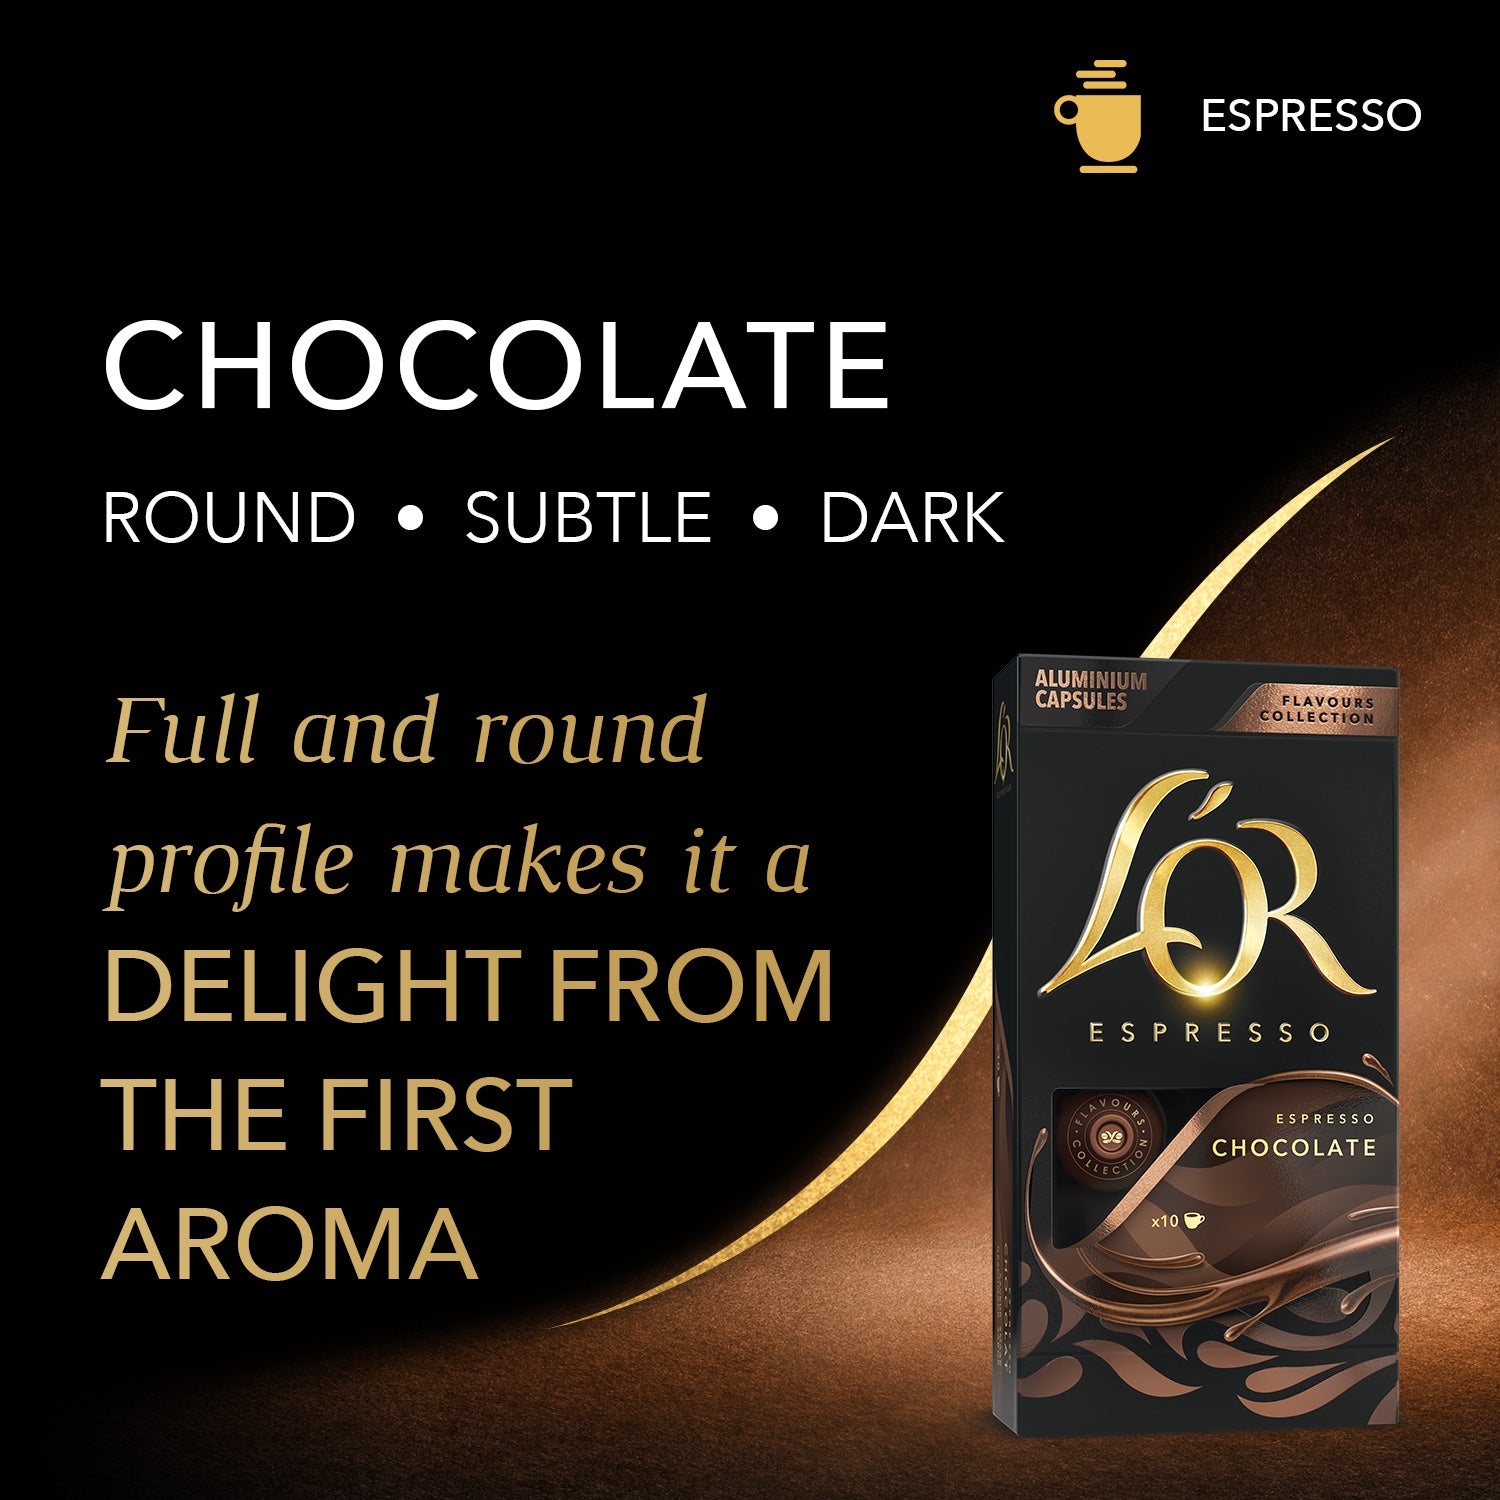 L'OR Chocolate Espresso is round, subtle, and dark.